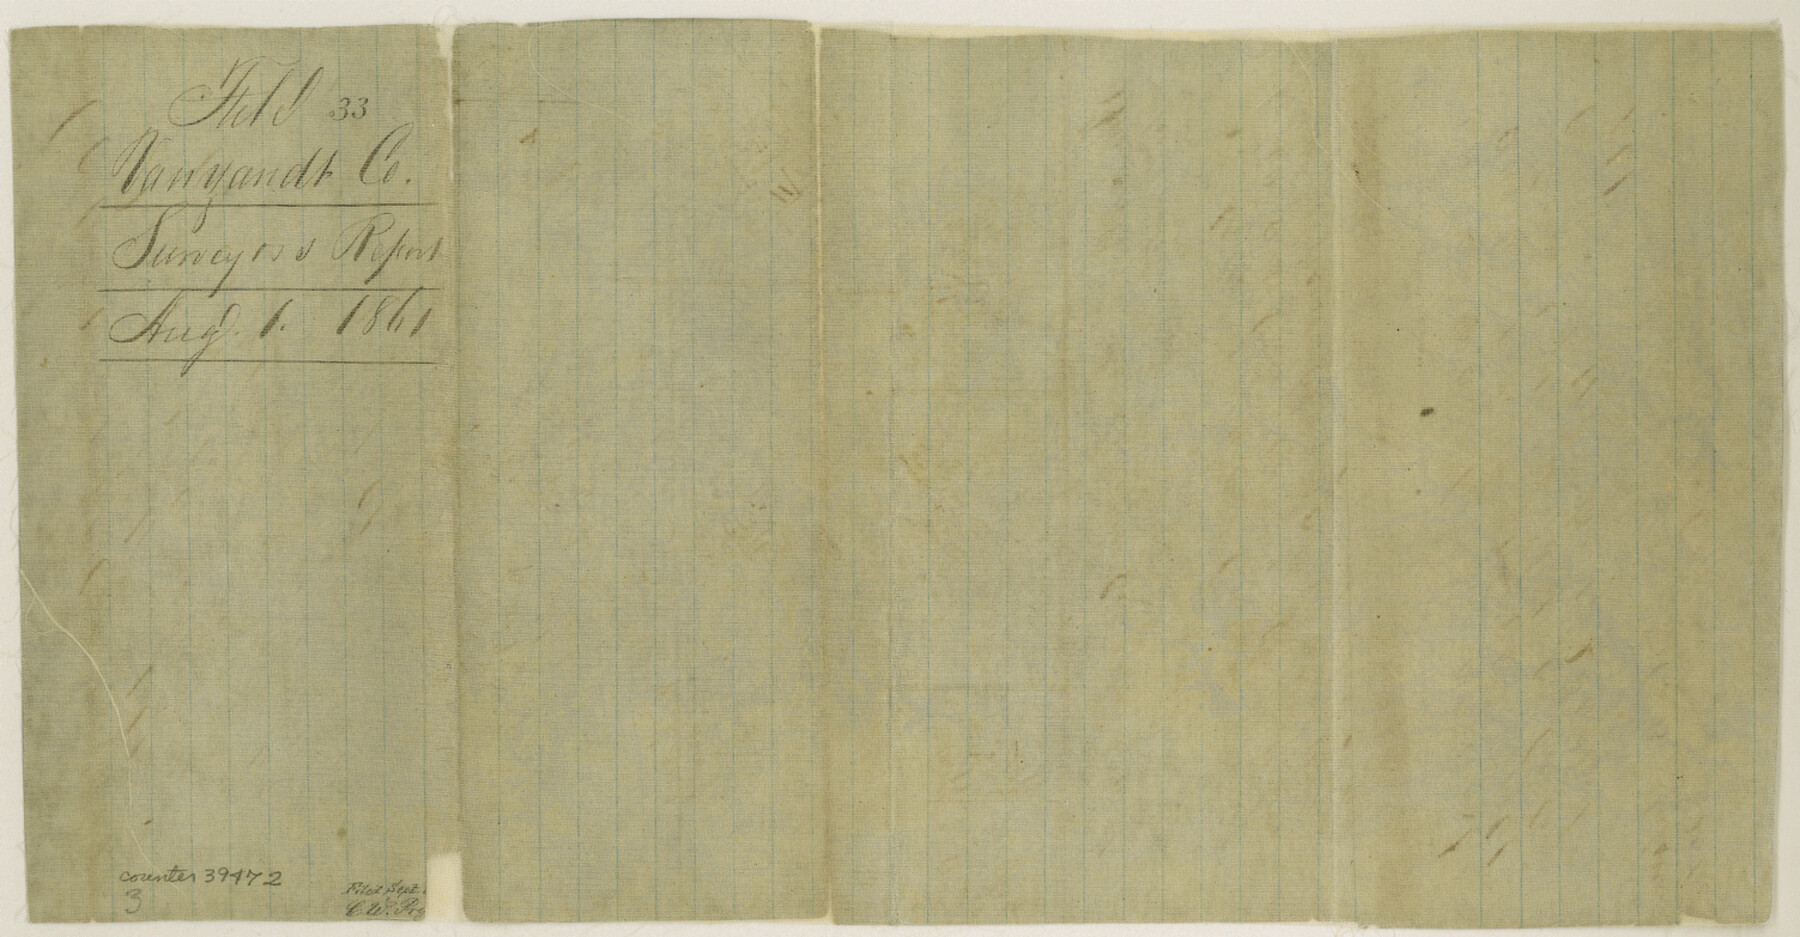 39472, Van Zandt County Sketch File 34, General Map Collection